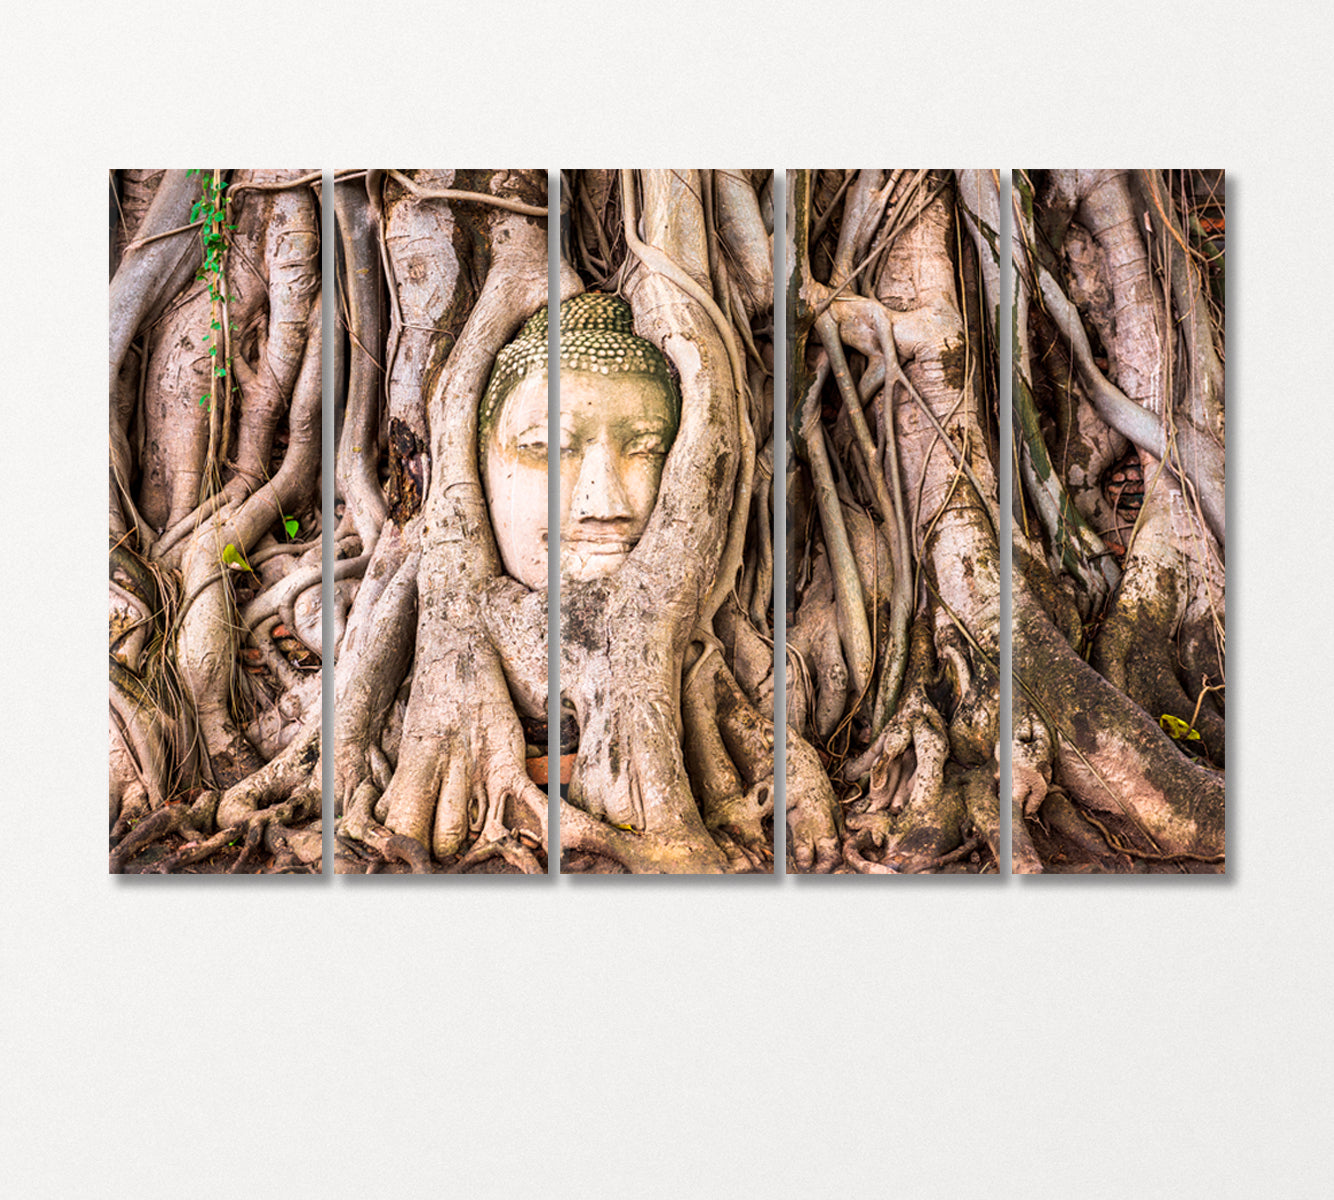 Buddha Head in Roots of Old Tree Banyan Thailand Canvas Print-Canvas Print-CetArt-5 Panels-36x24 inches-CetArt